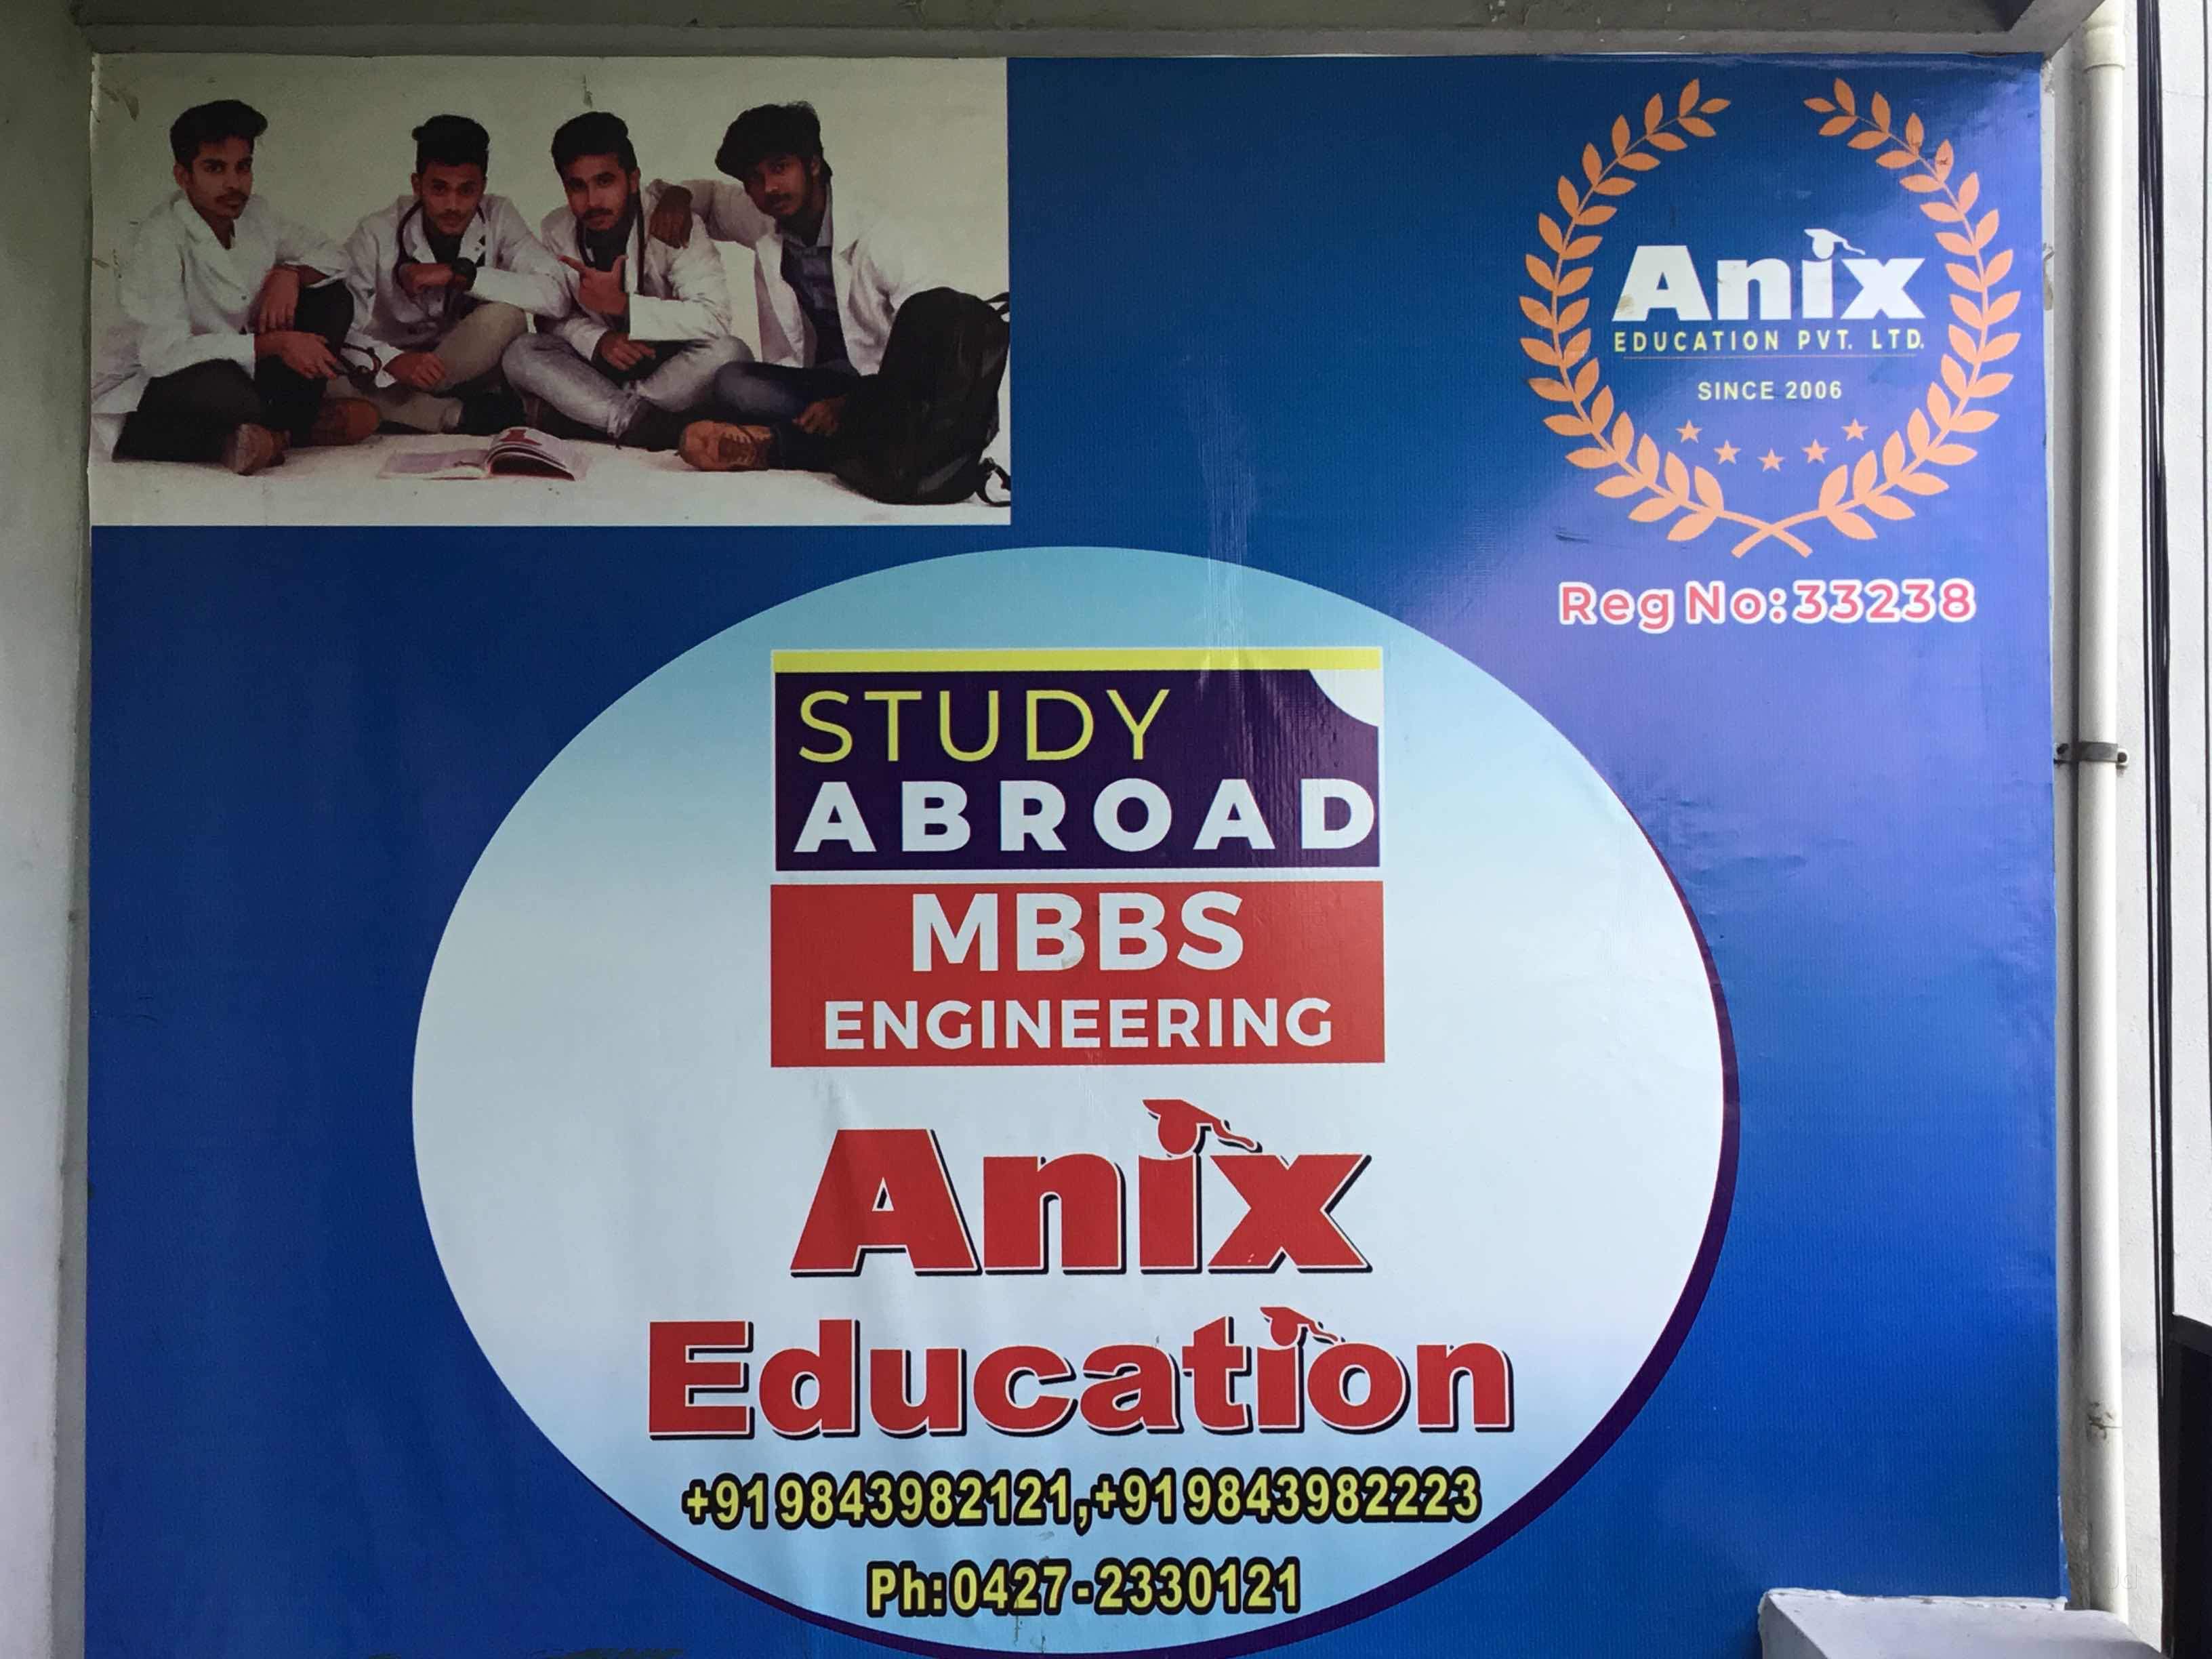 Anix Education